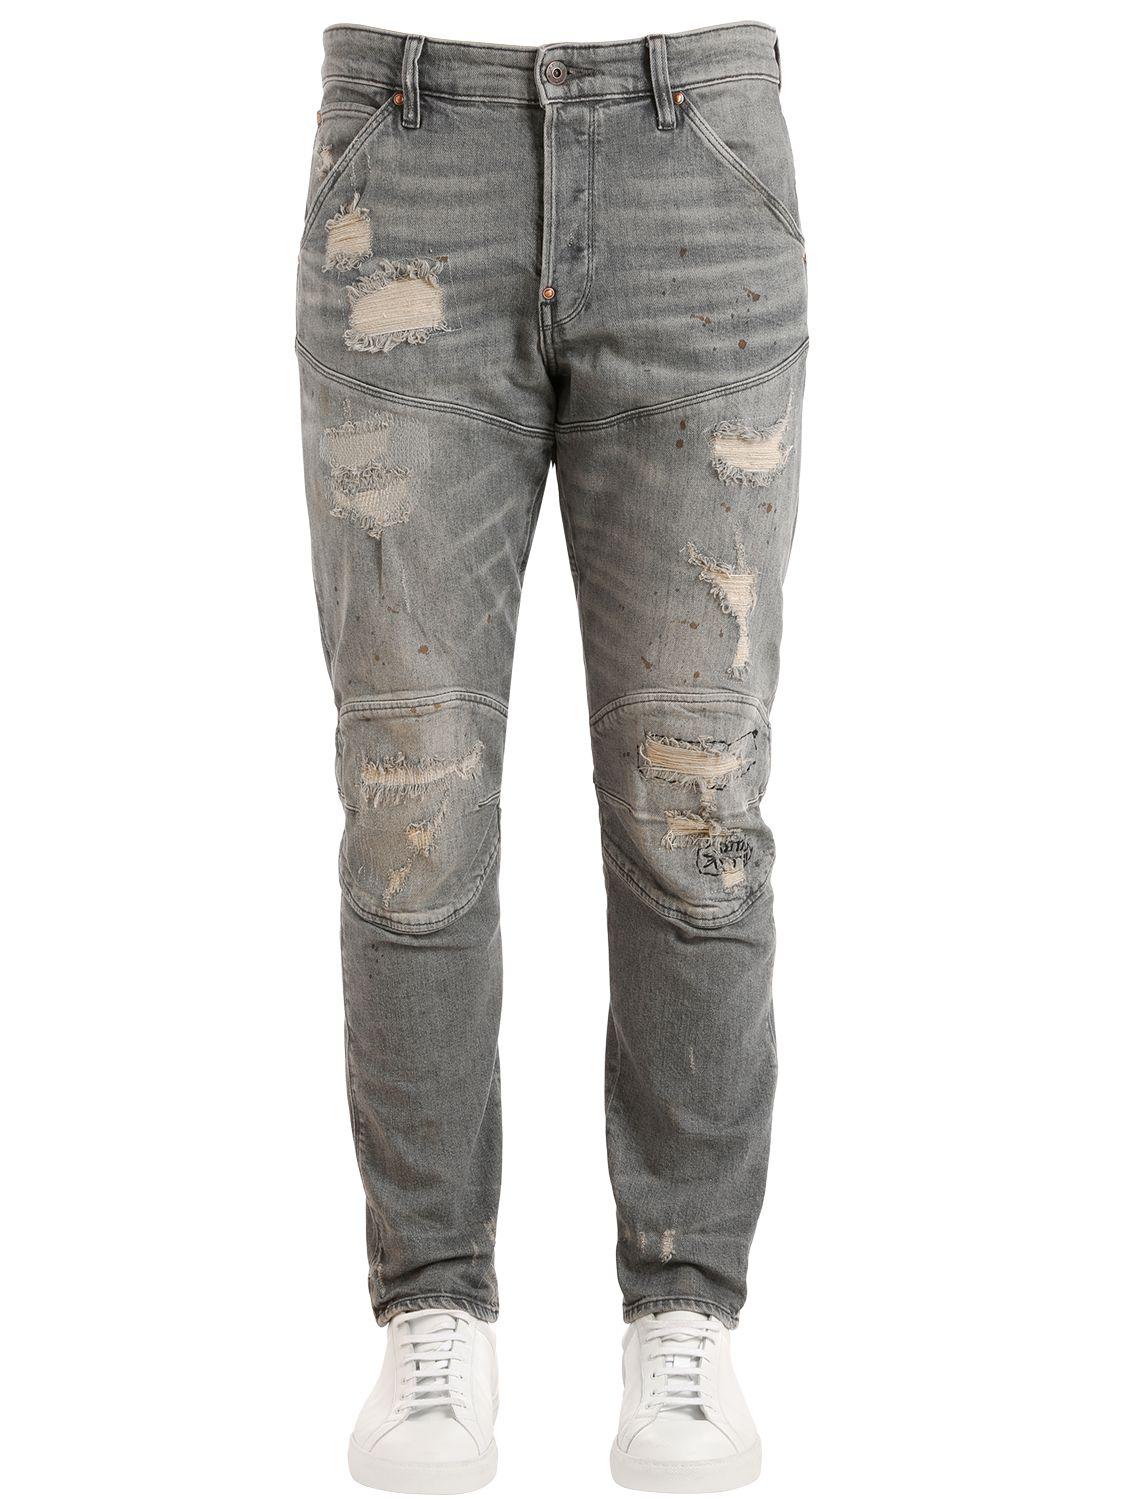 G-Star RAW Denim Essentials 3d Tapered Jeans in Grey (Grey) for Men - Lyst